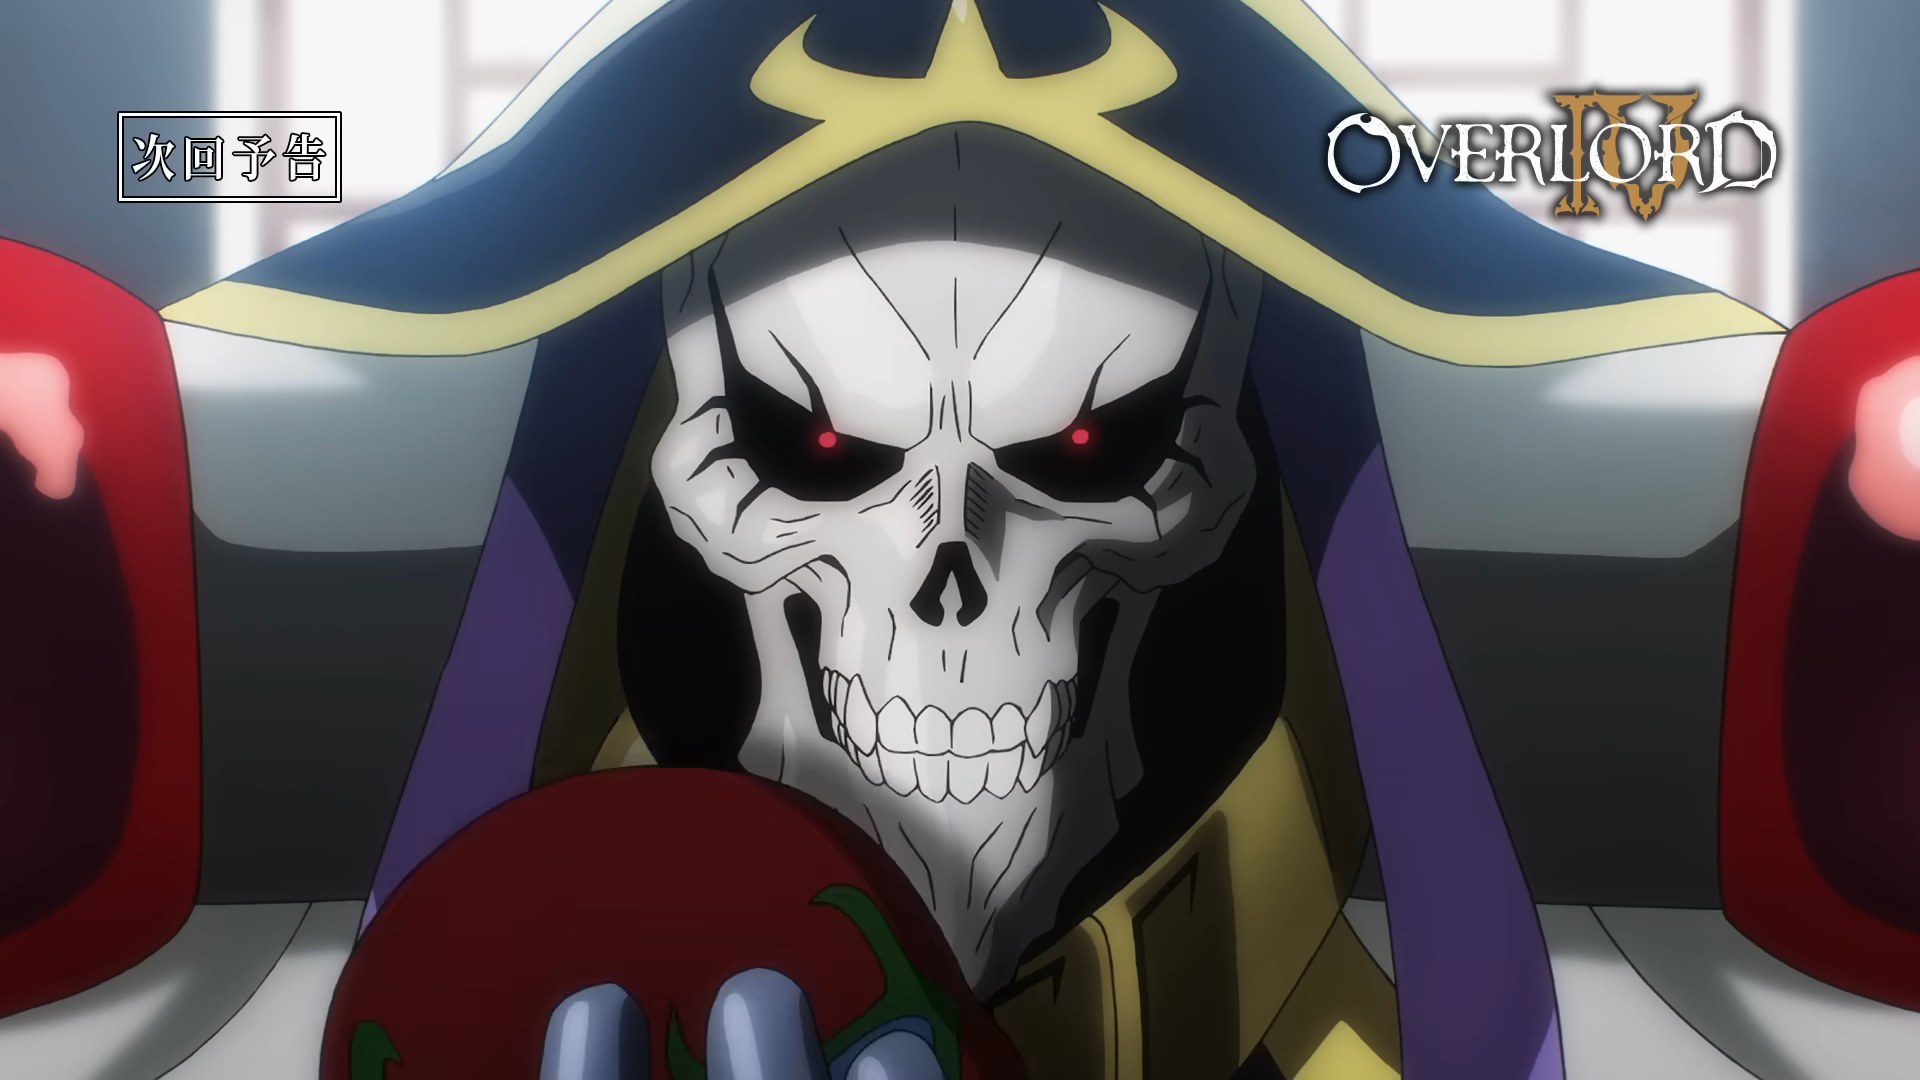 Assistir Overlord 4: Episódio 3 Online - Animes BR